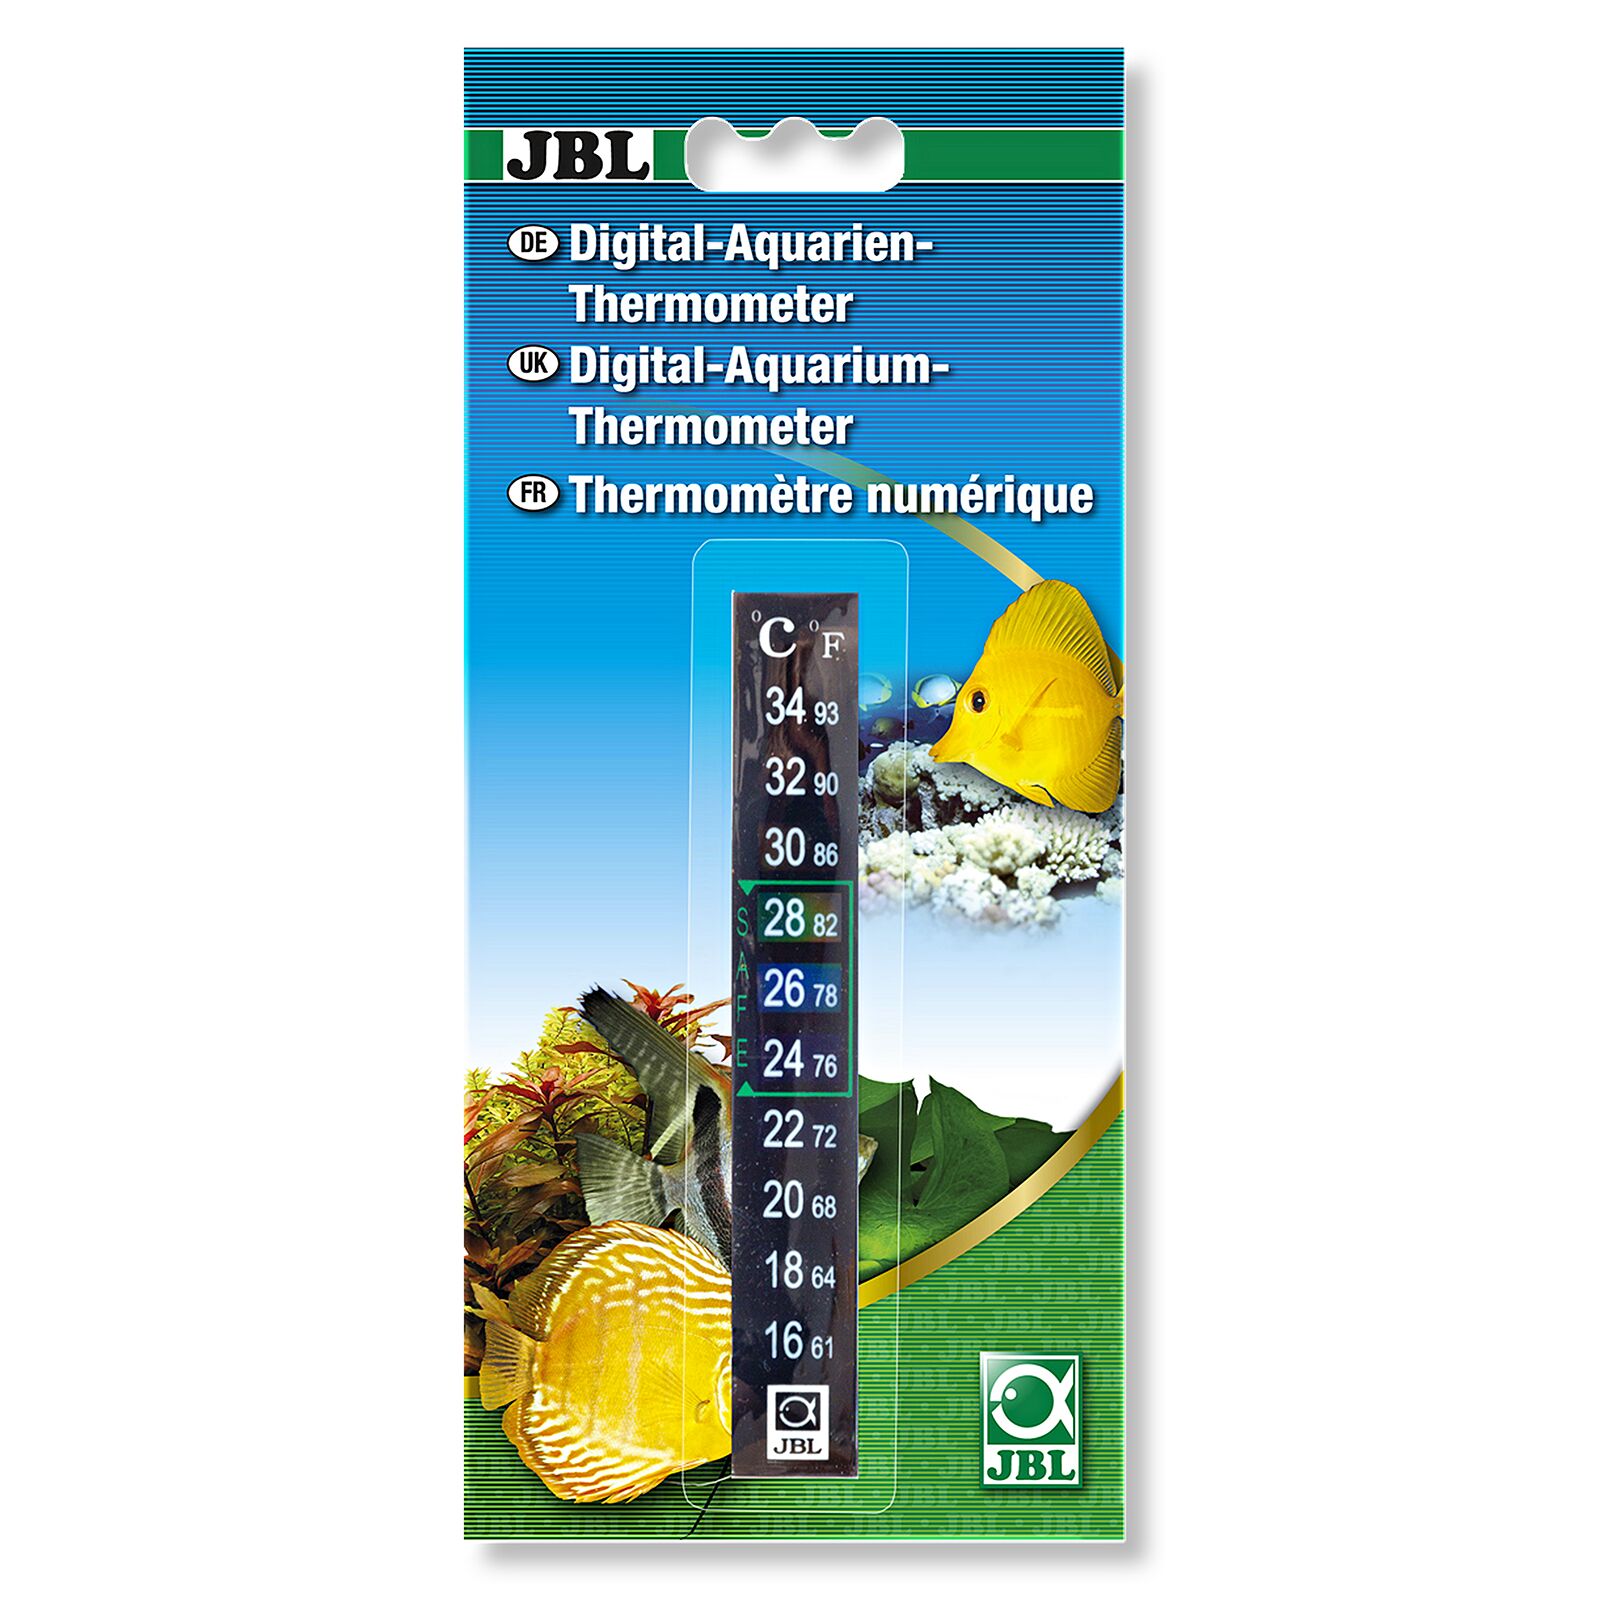 JBL - Aquarium Thermometer - Digital